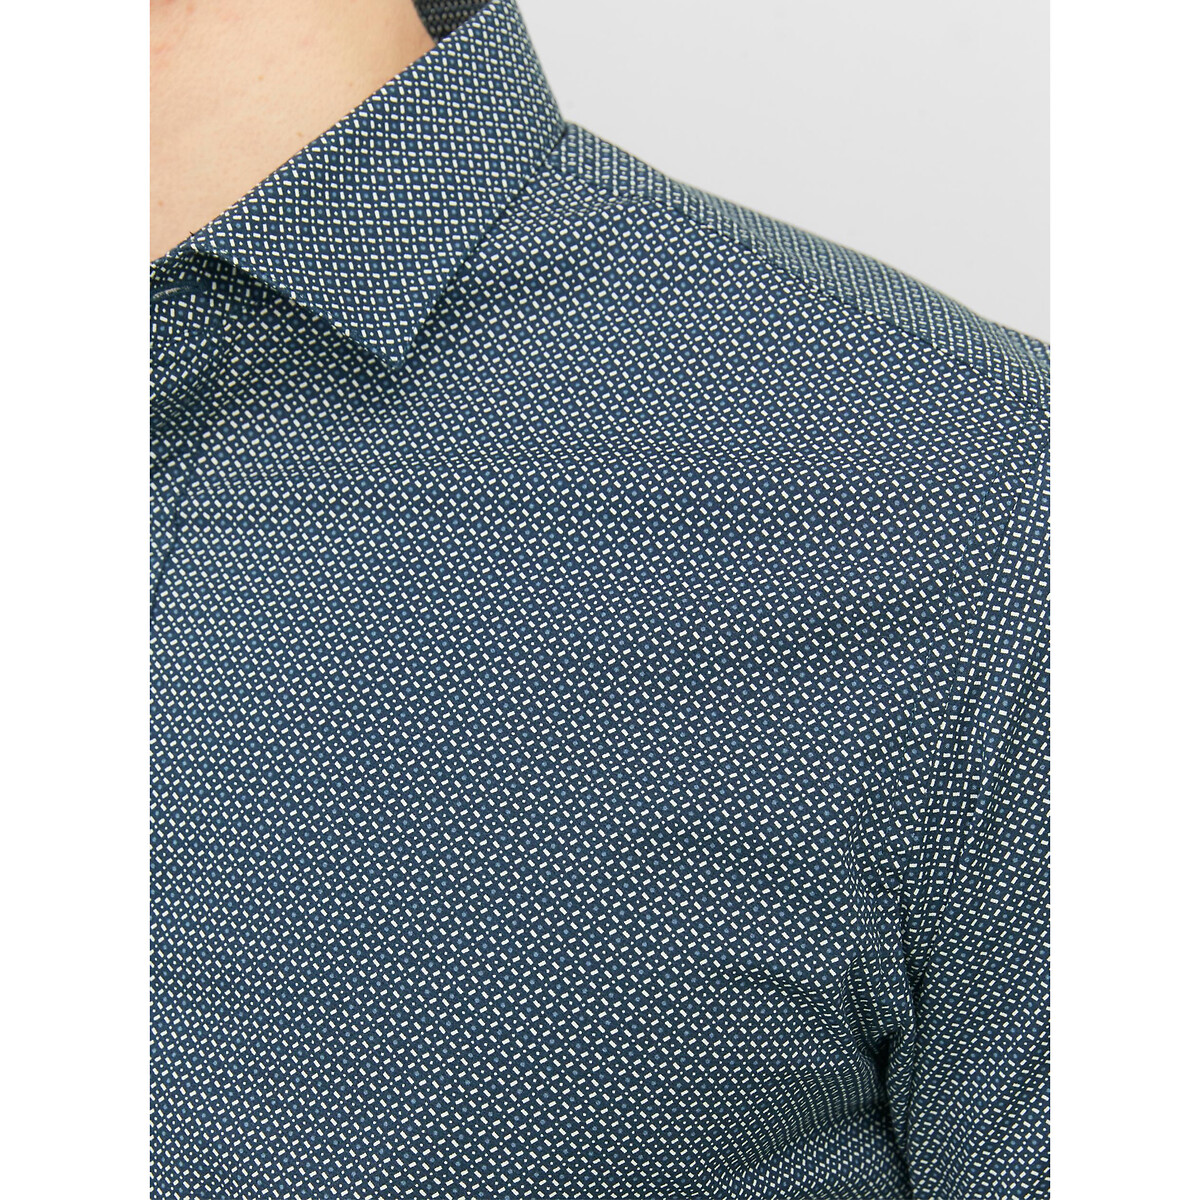 Рубашка Слим из ткани стрейч M синий LaRedoute, размер M - фото 3